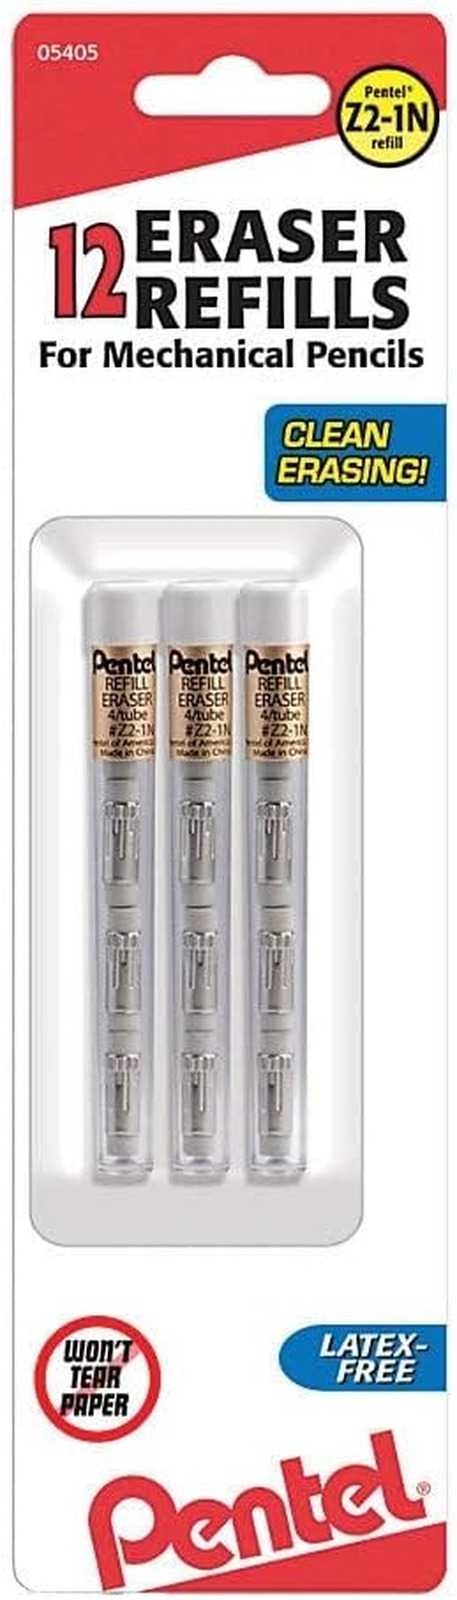 ® Eraser Refills for Mechanical Pencils, White, Pack of 12